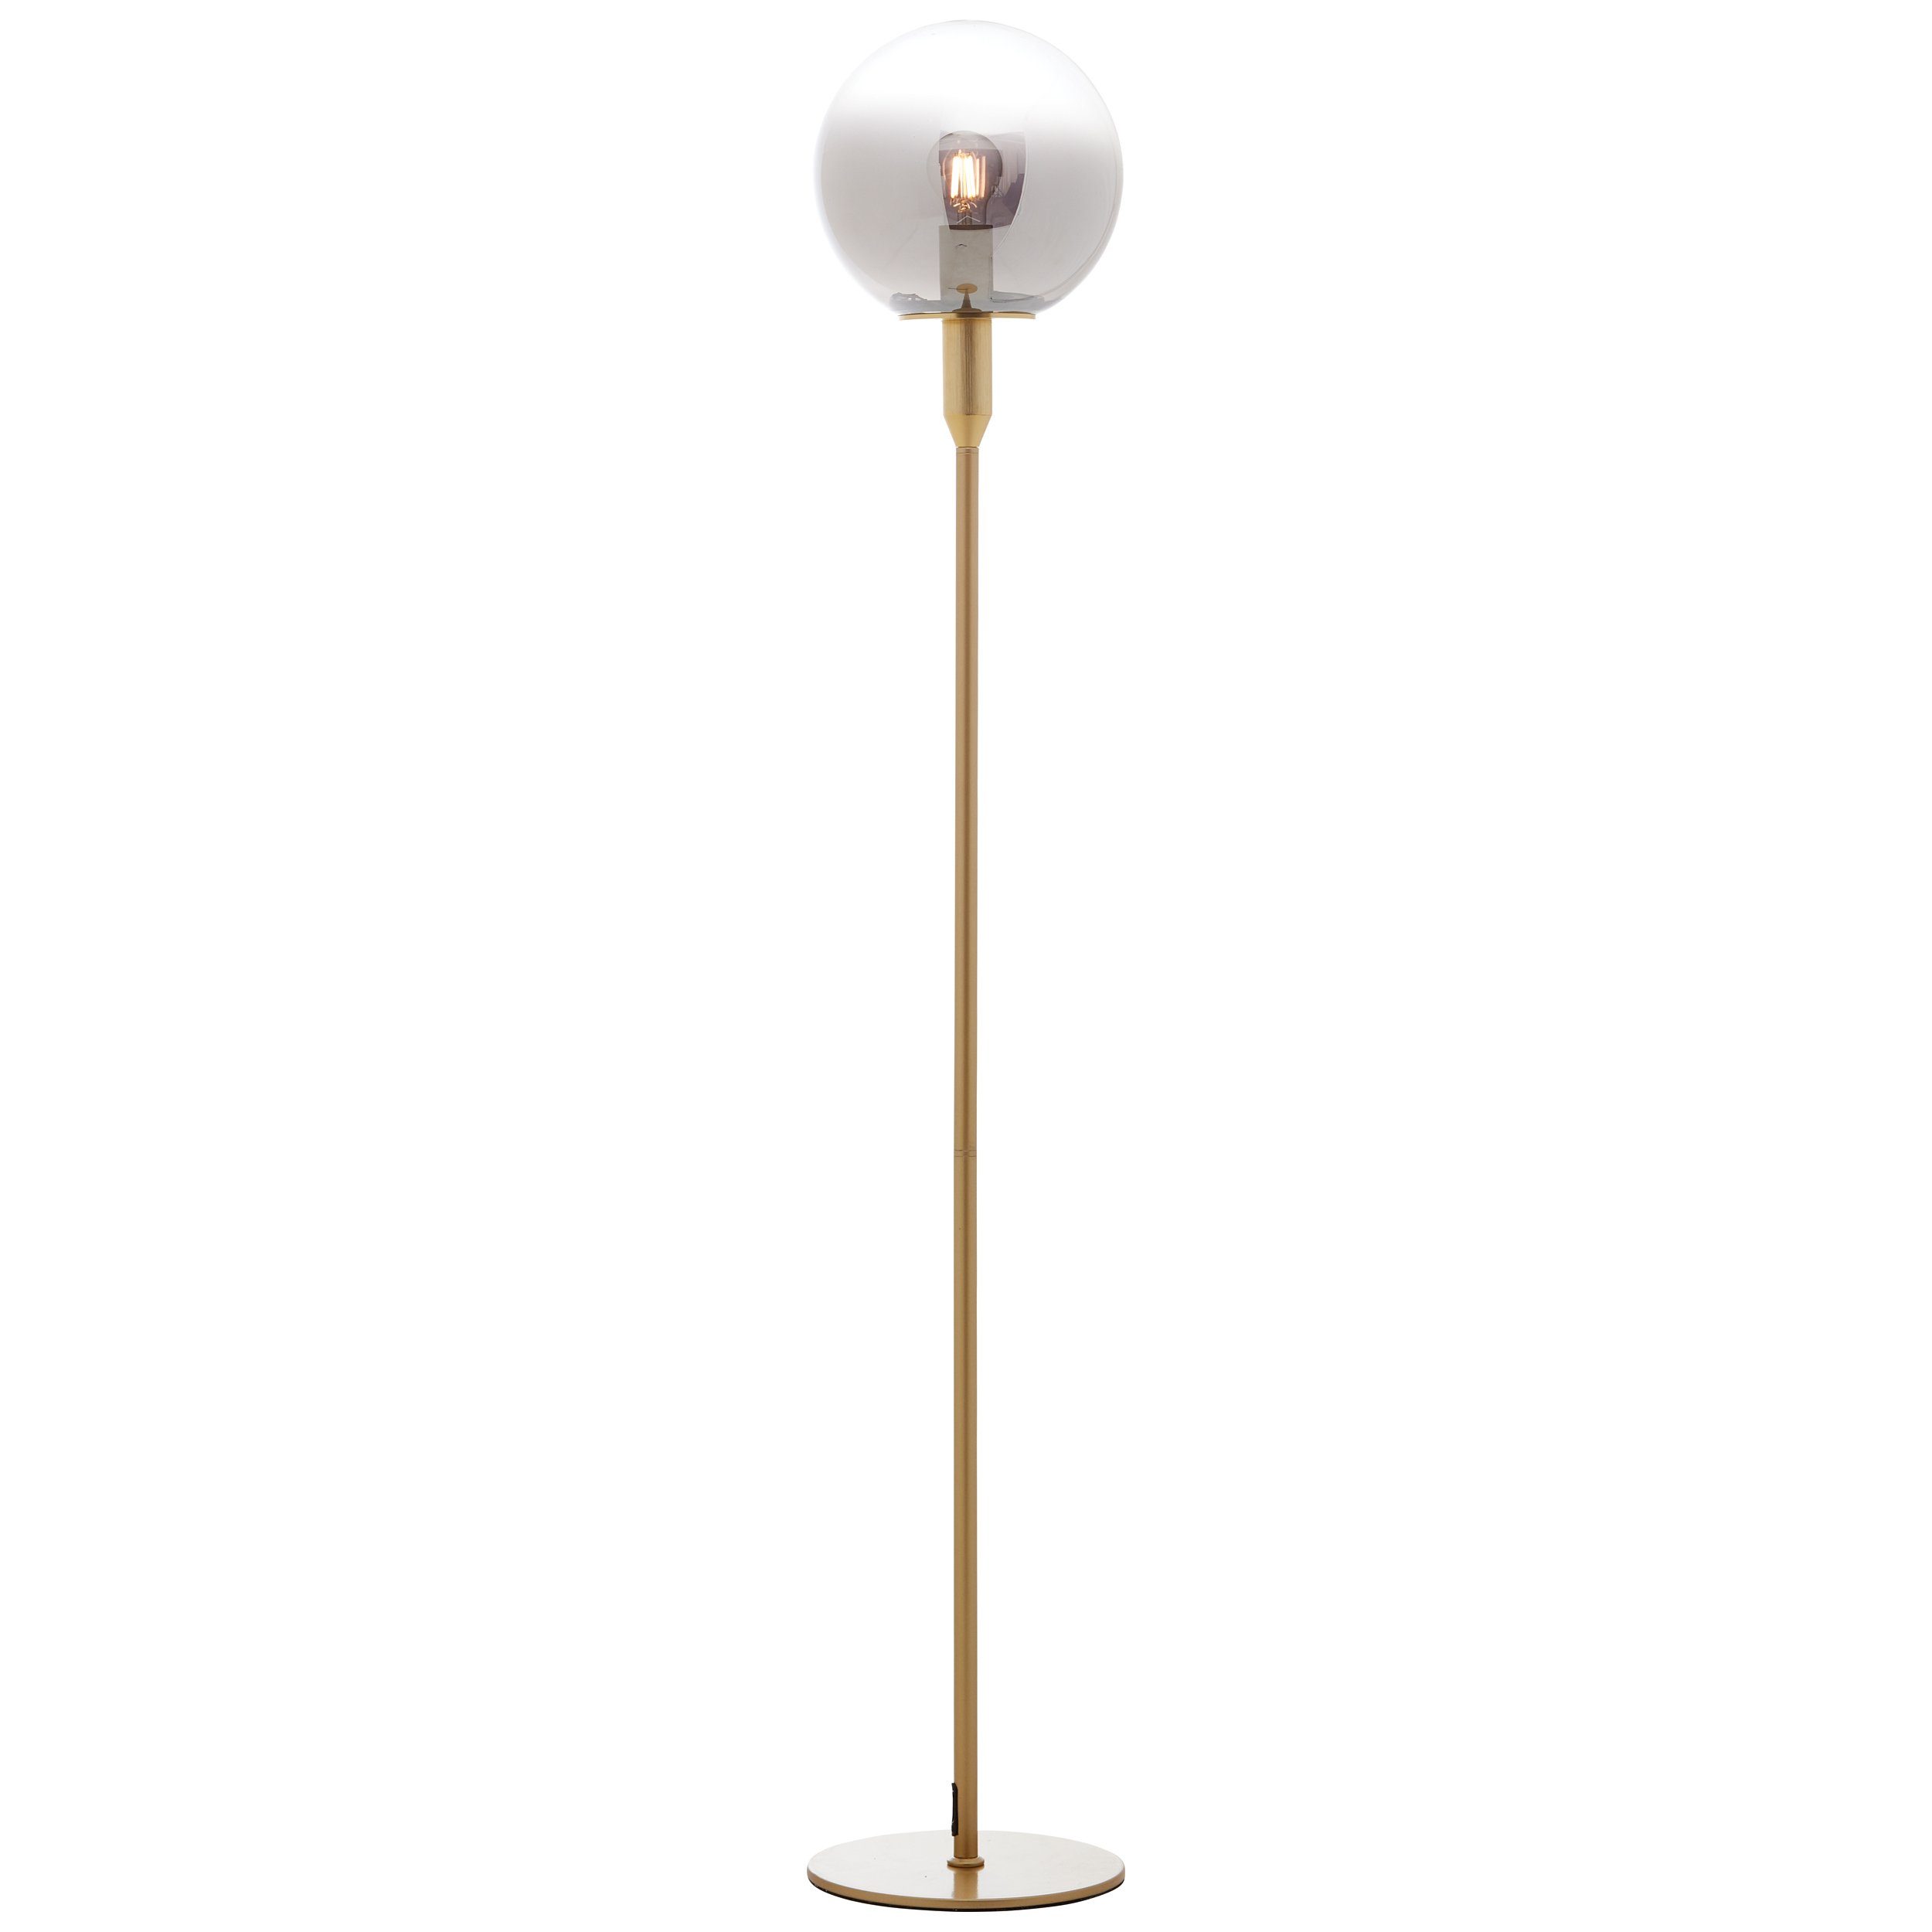 Brilliant Stehlampe Gould, Gould E27, Standleuchte Metall/Glas, 52 W, Für gold/rauchglas, A60, LED-Leuchtmittel 1flg 1x geeignet